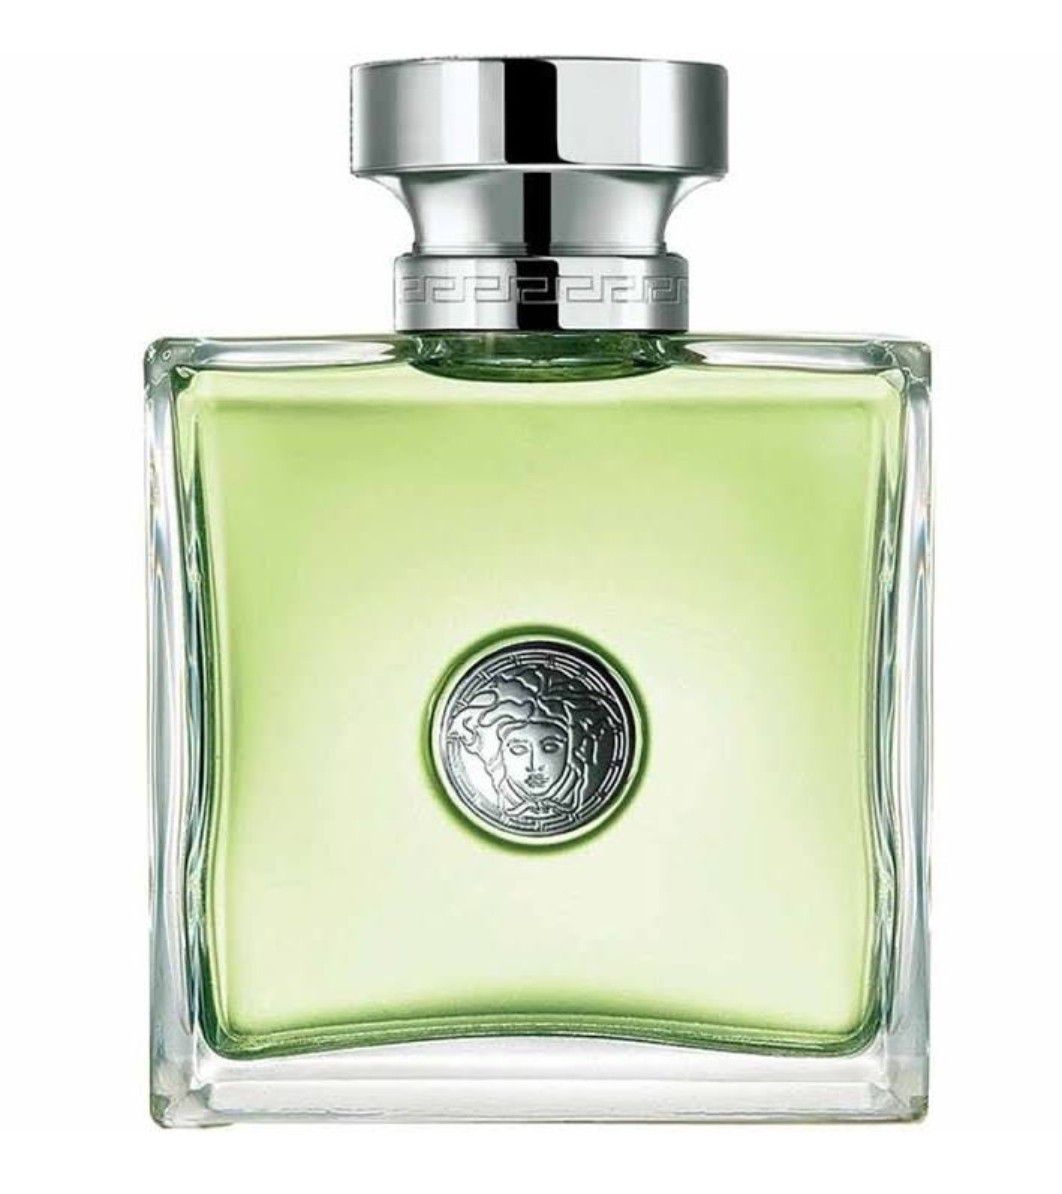 Versace versense 3.4 oz perfume